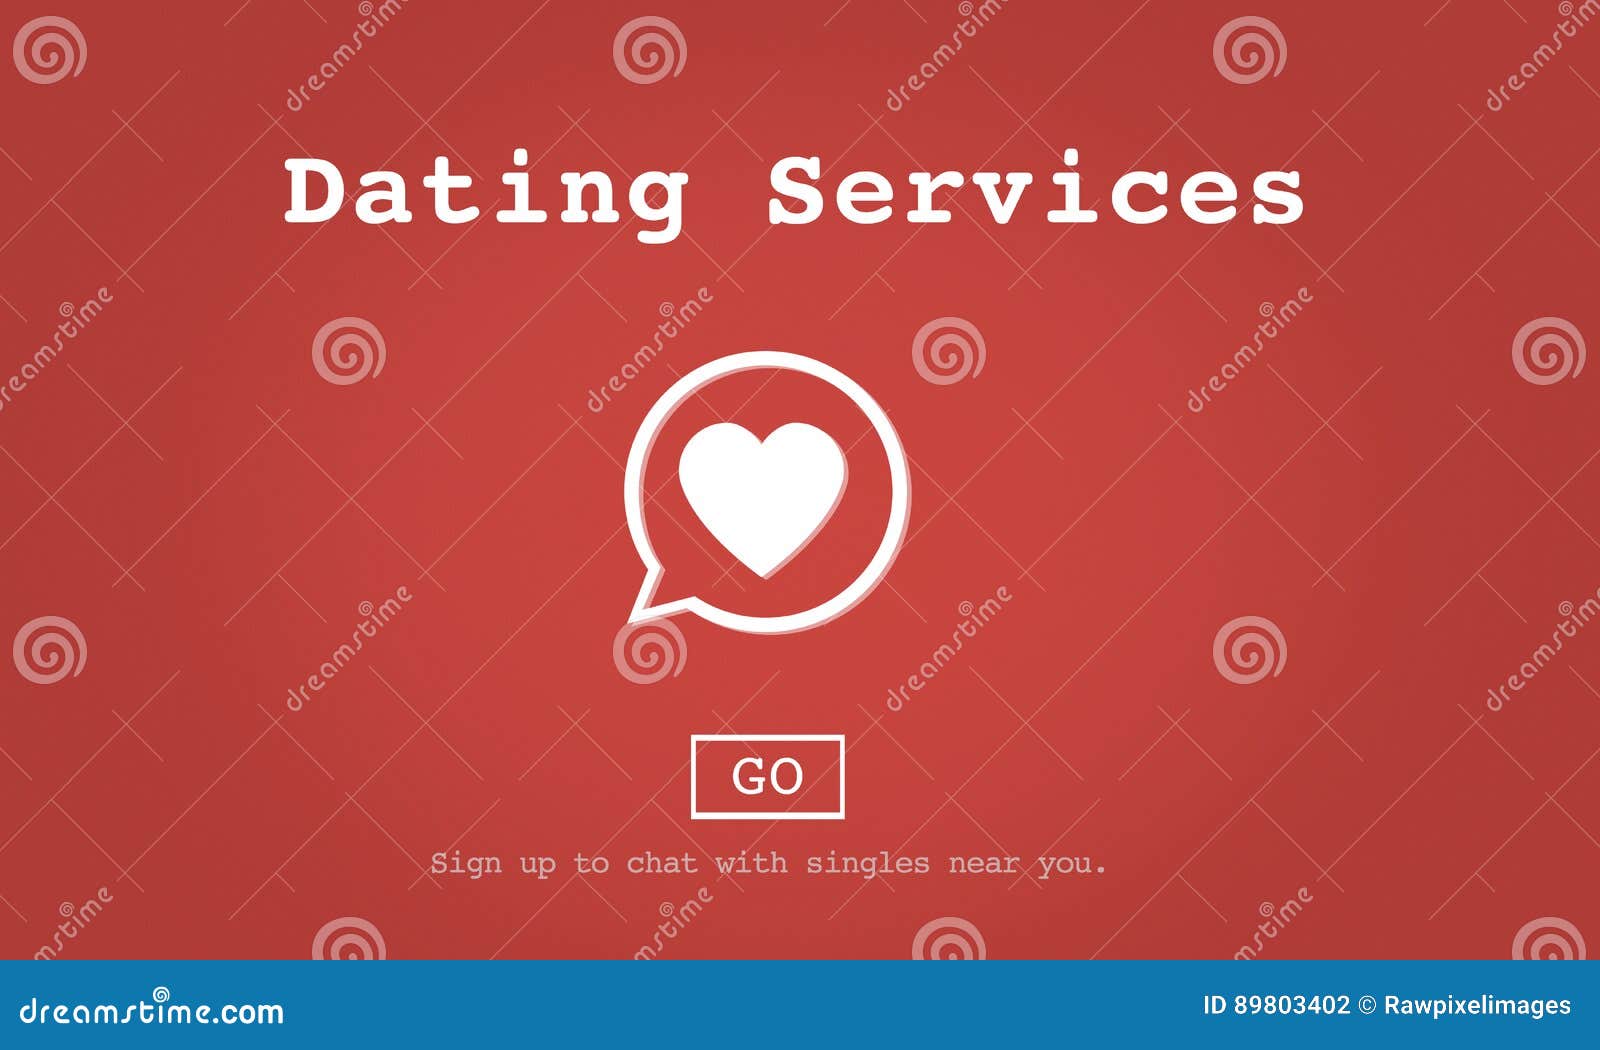 best winnipeg dating site